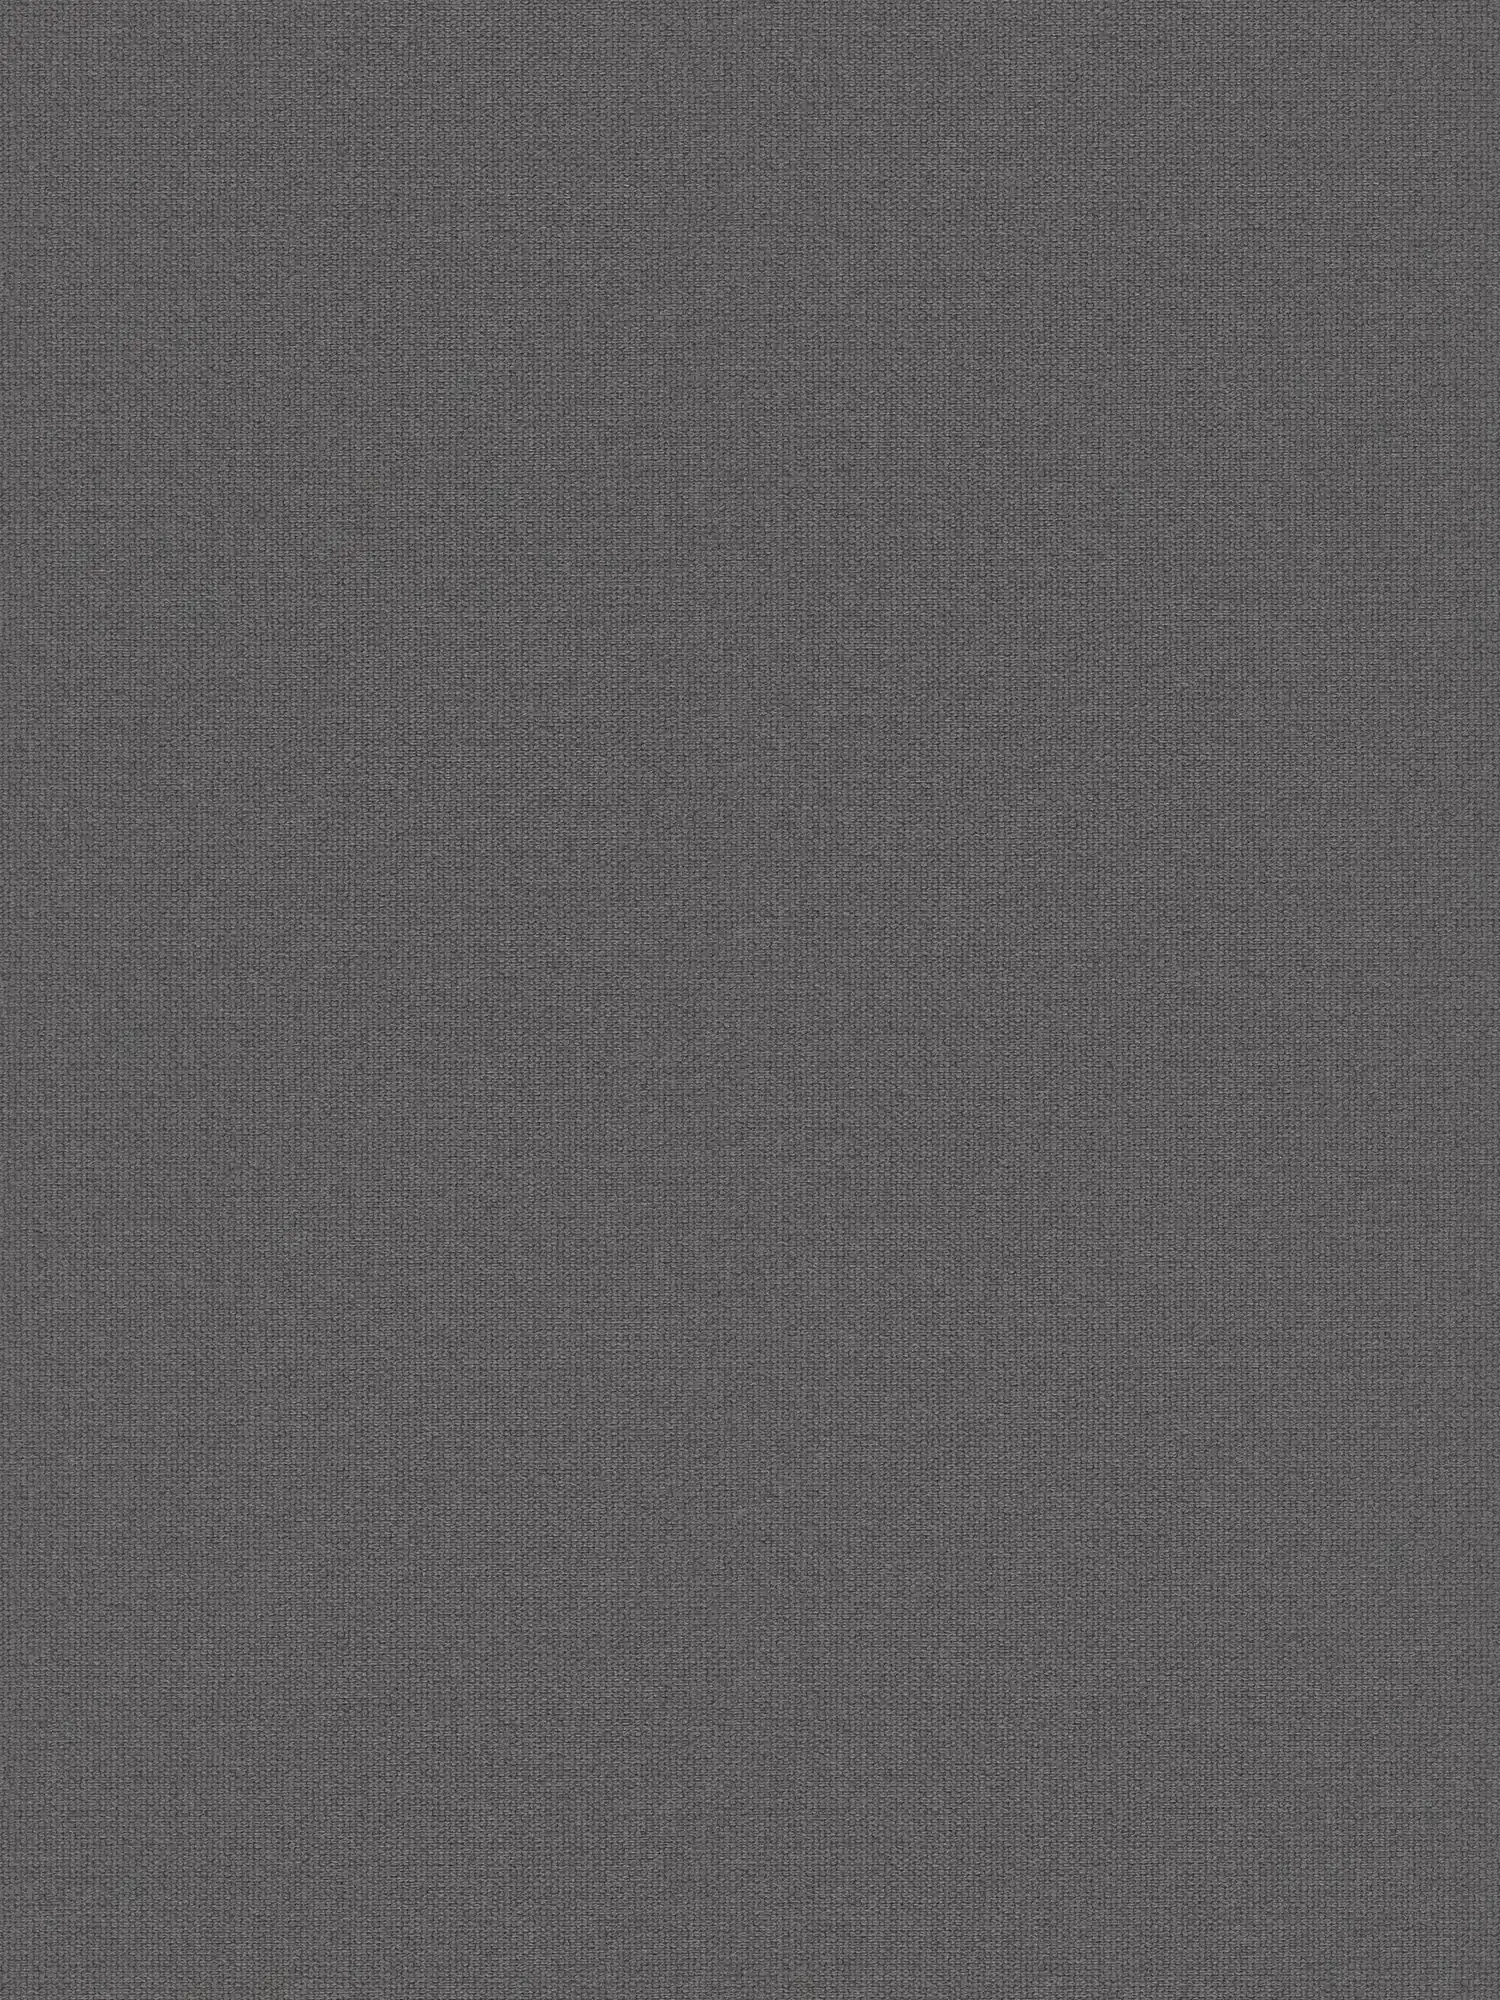 Linen look wallpaper plain with texture design - grey, black
